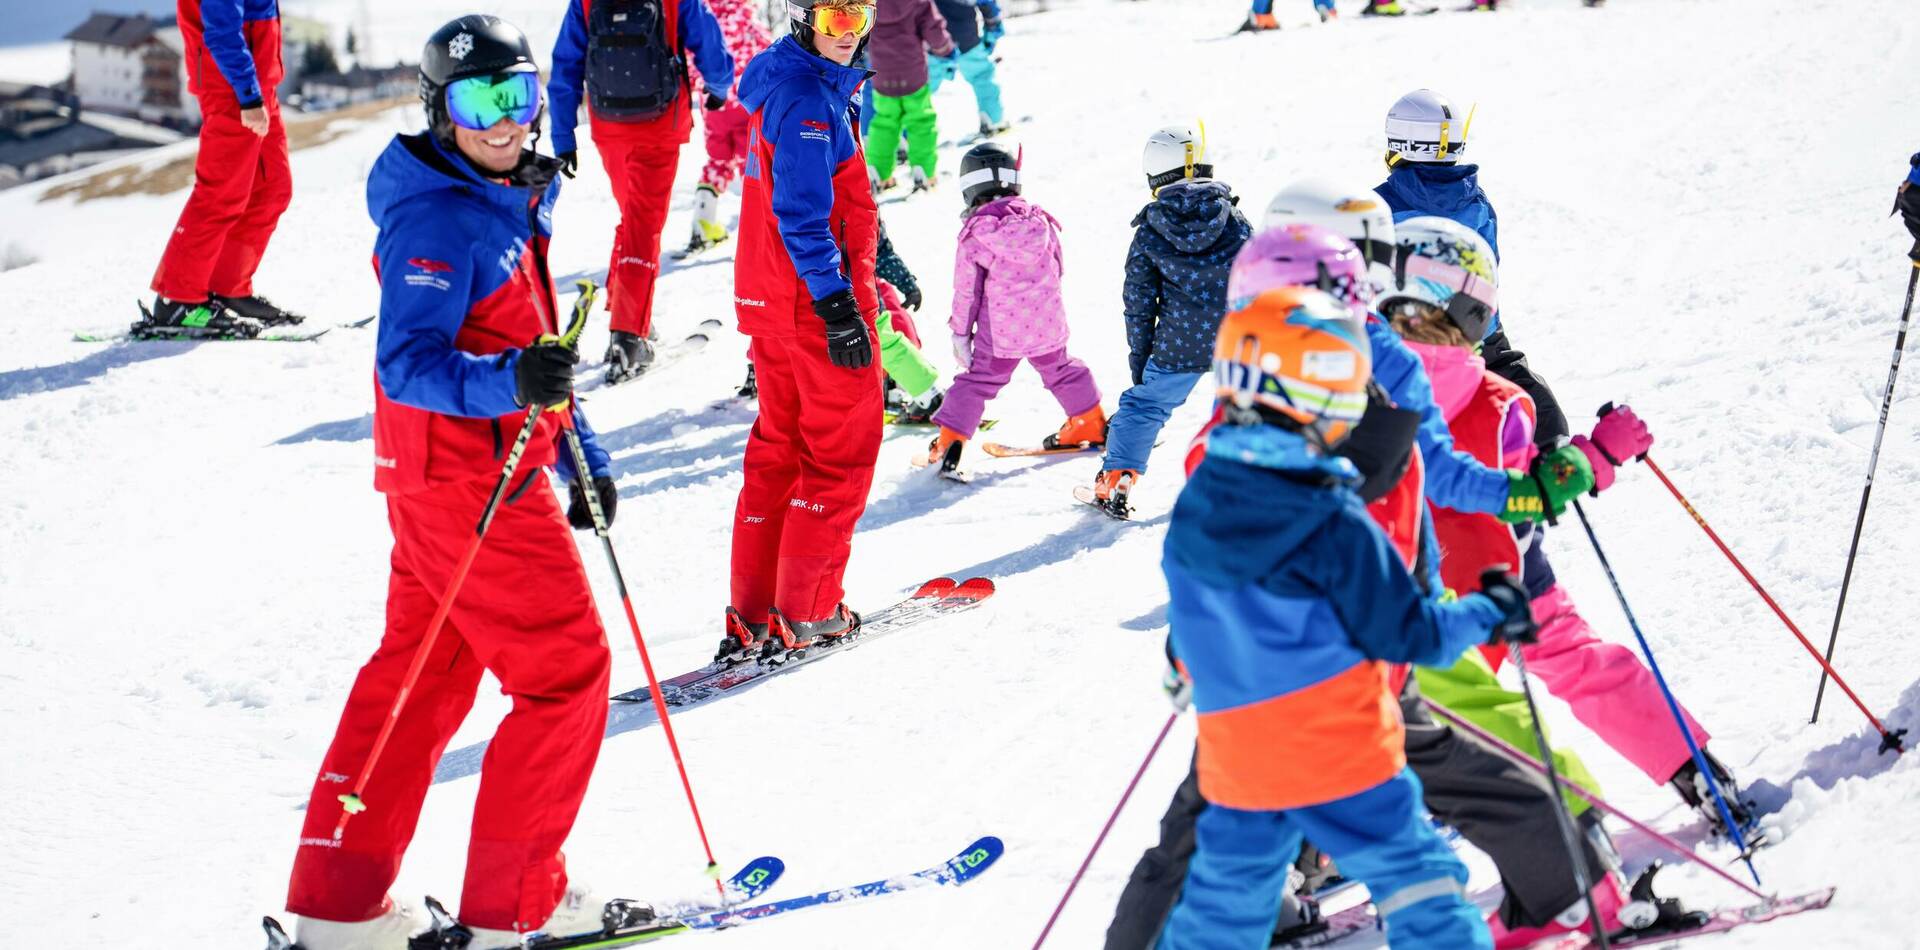 children's ski school
grouping 